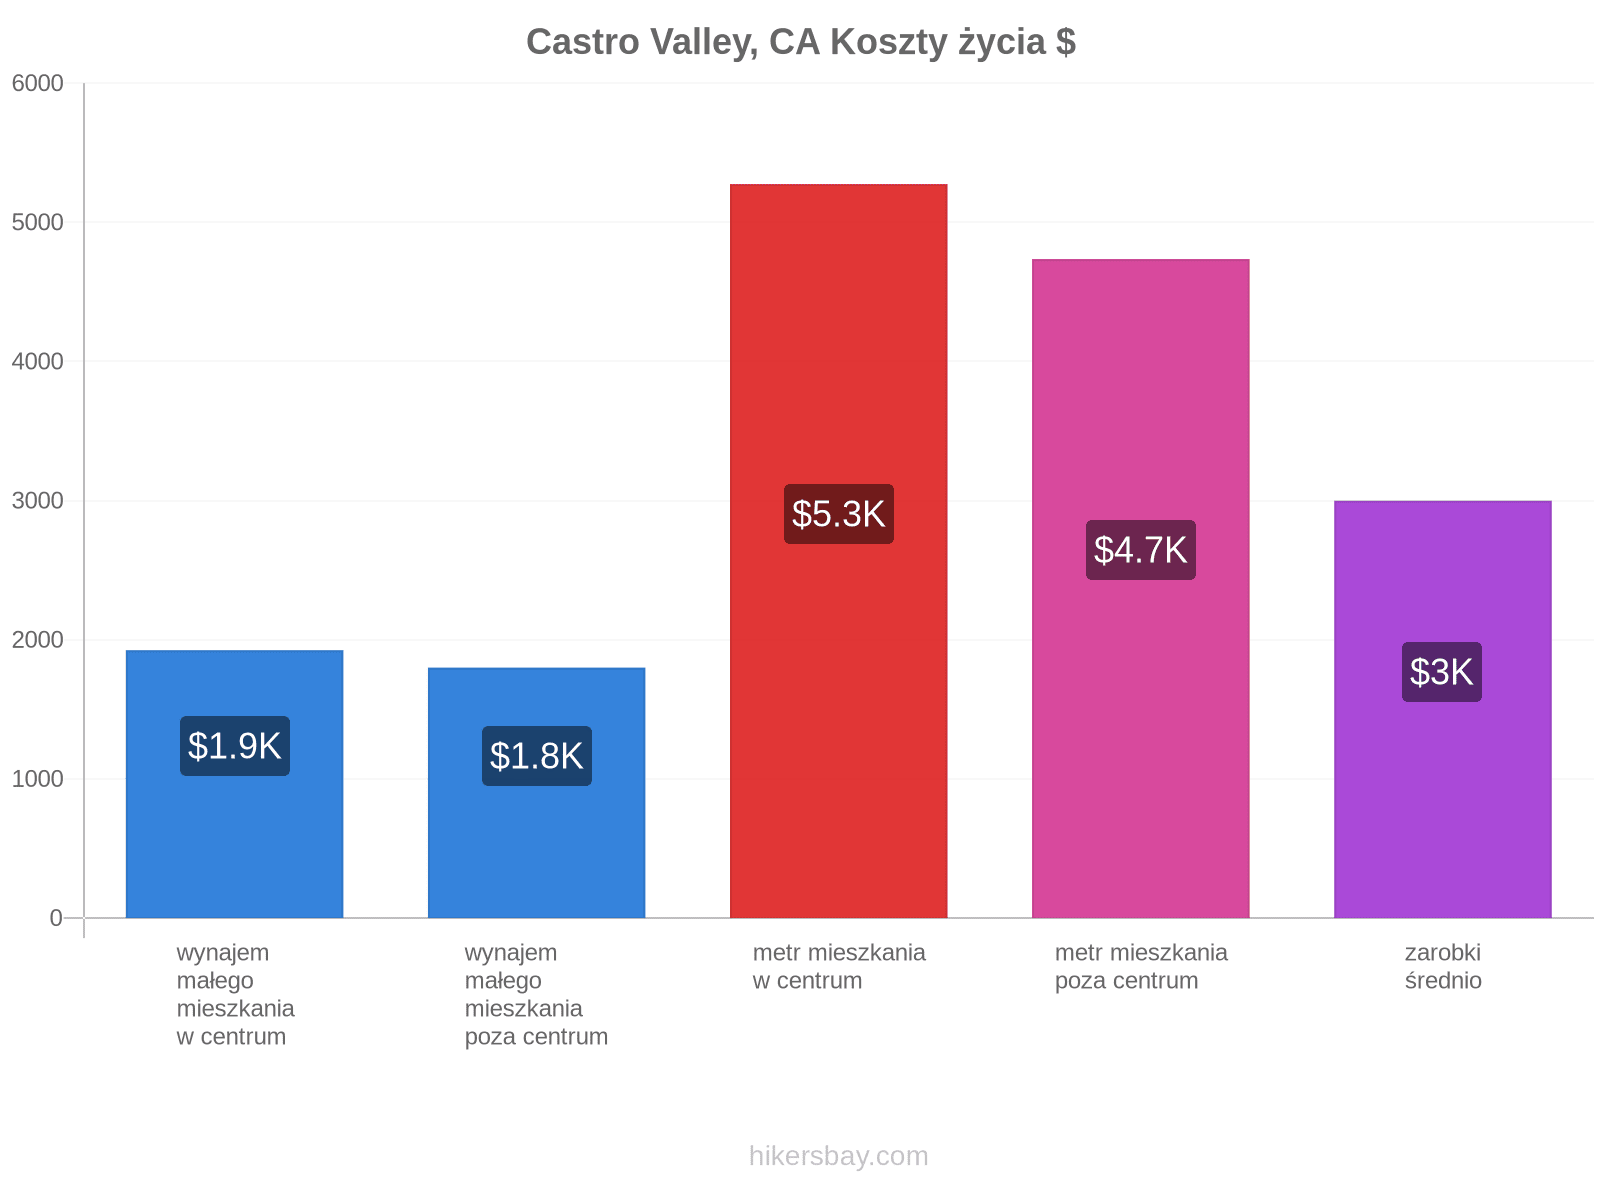 Castro Valley, CA koszty życia hikersbay.com